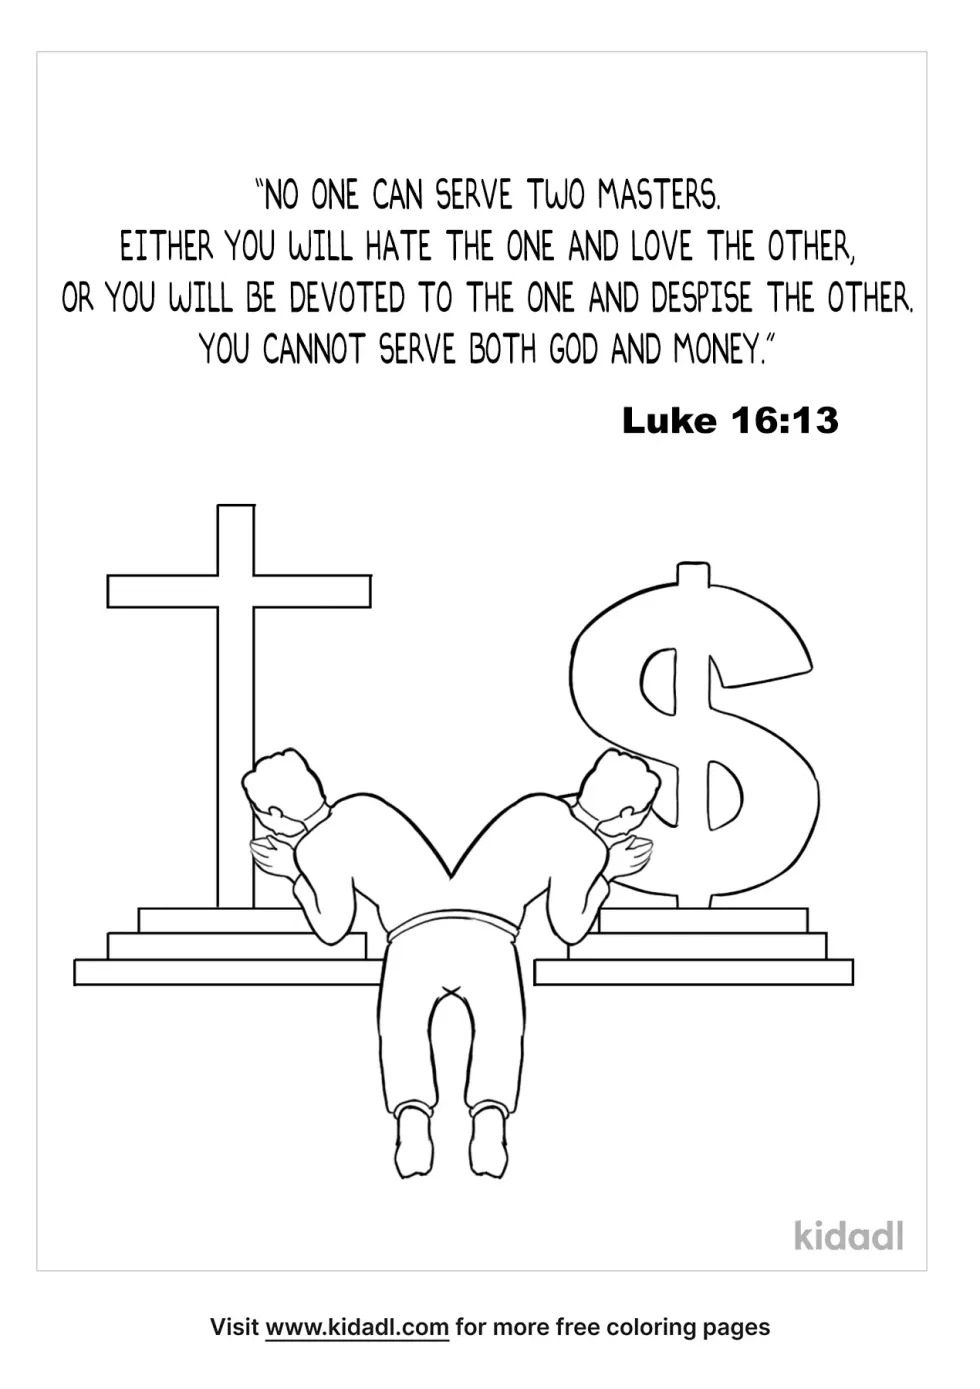 Luke 16:1-13 Coloring Page